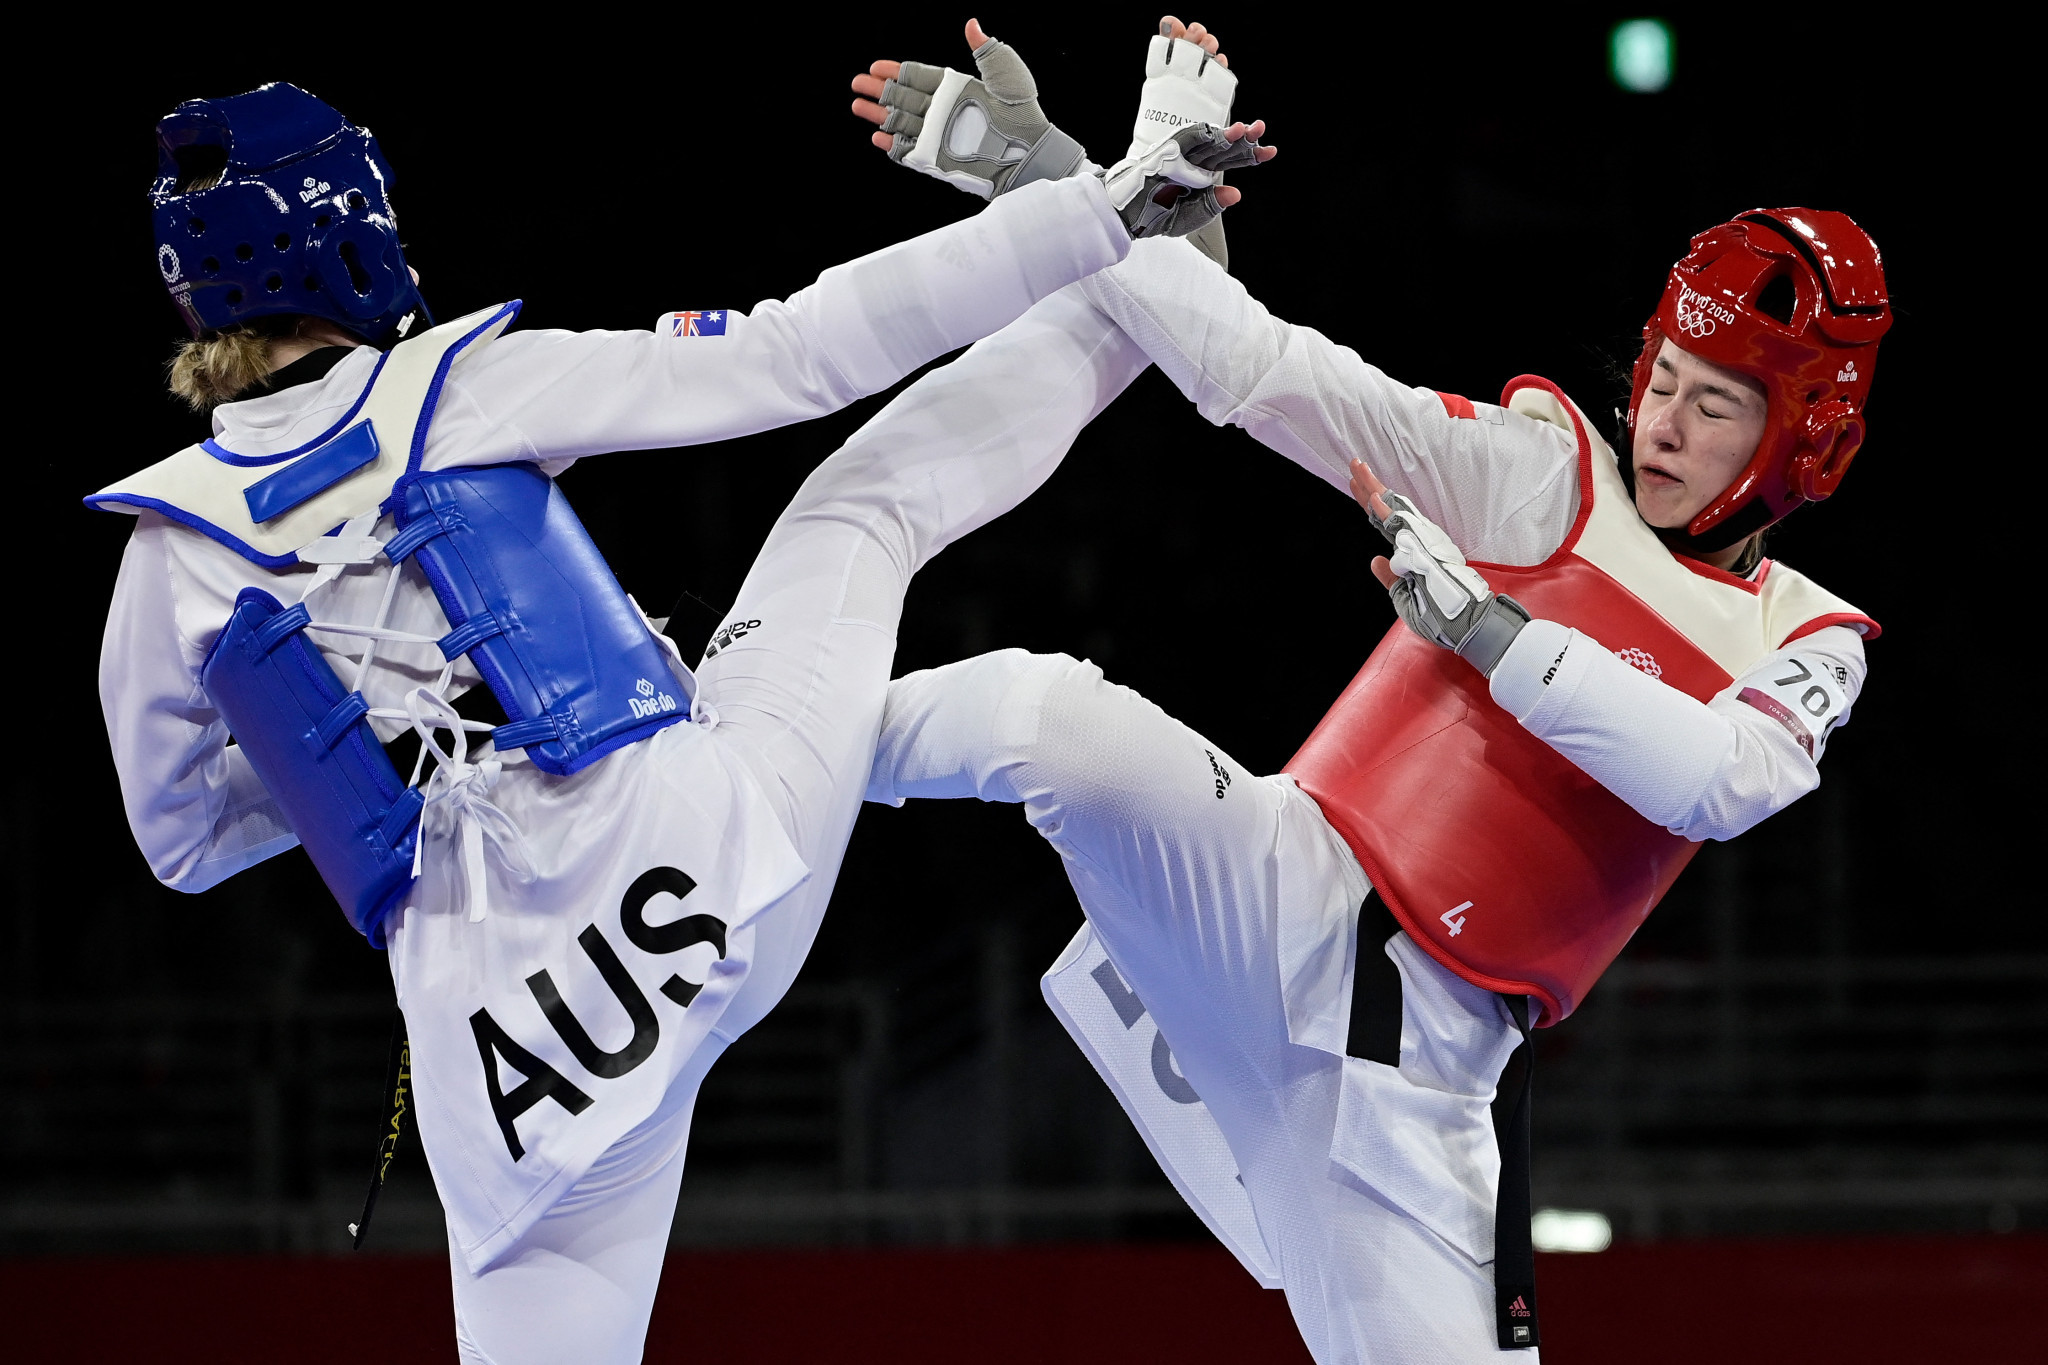 Australia has celebrated taekwondo achievements on the world stage ©Getty Images